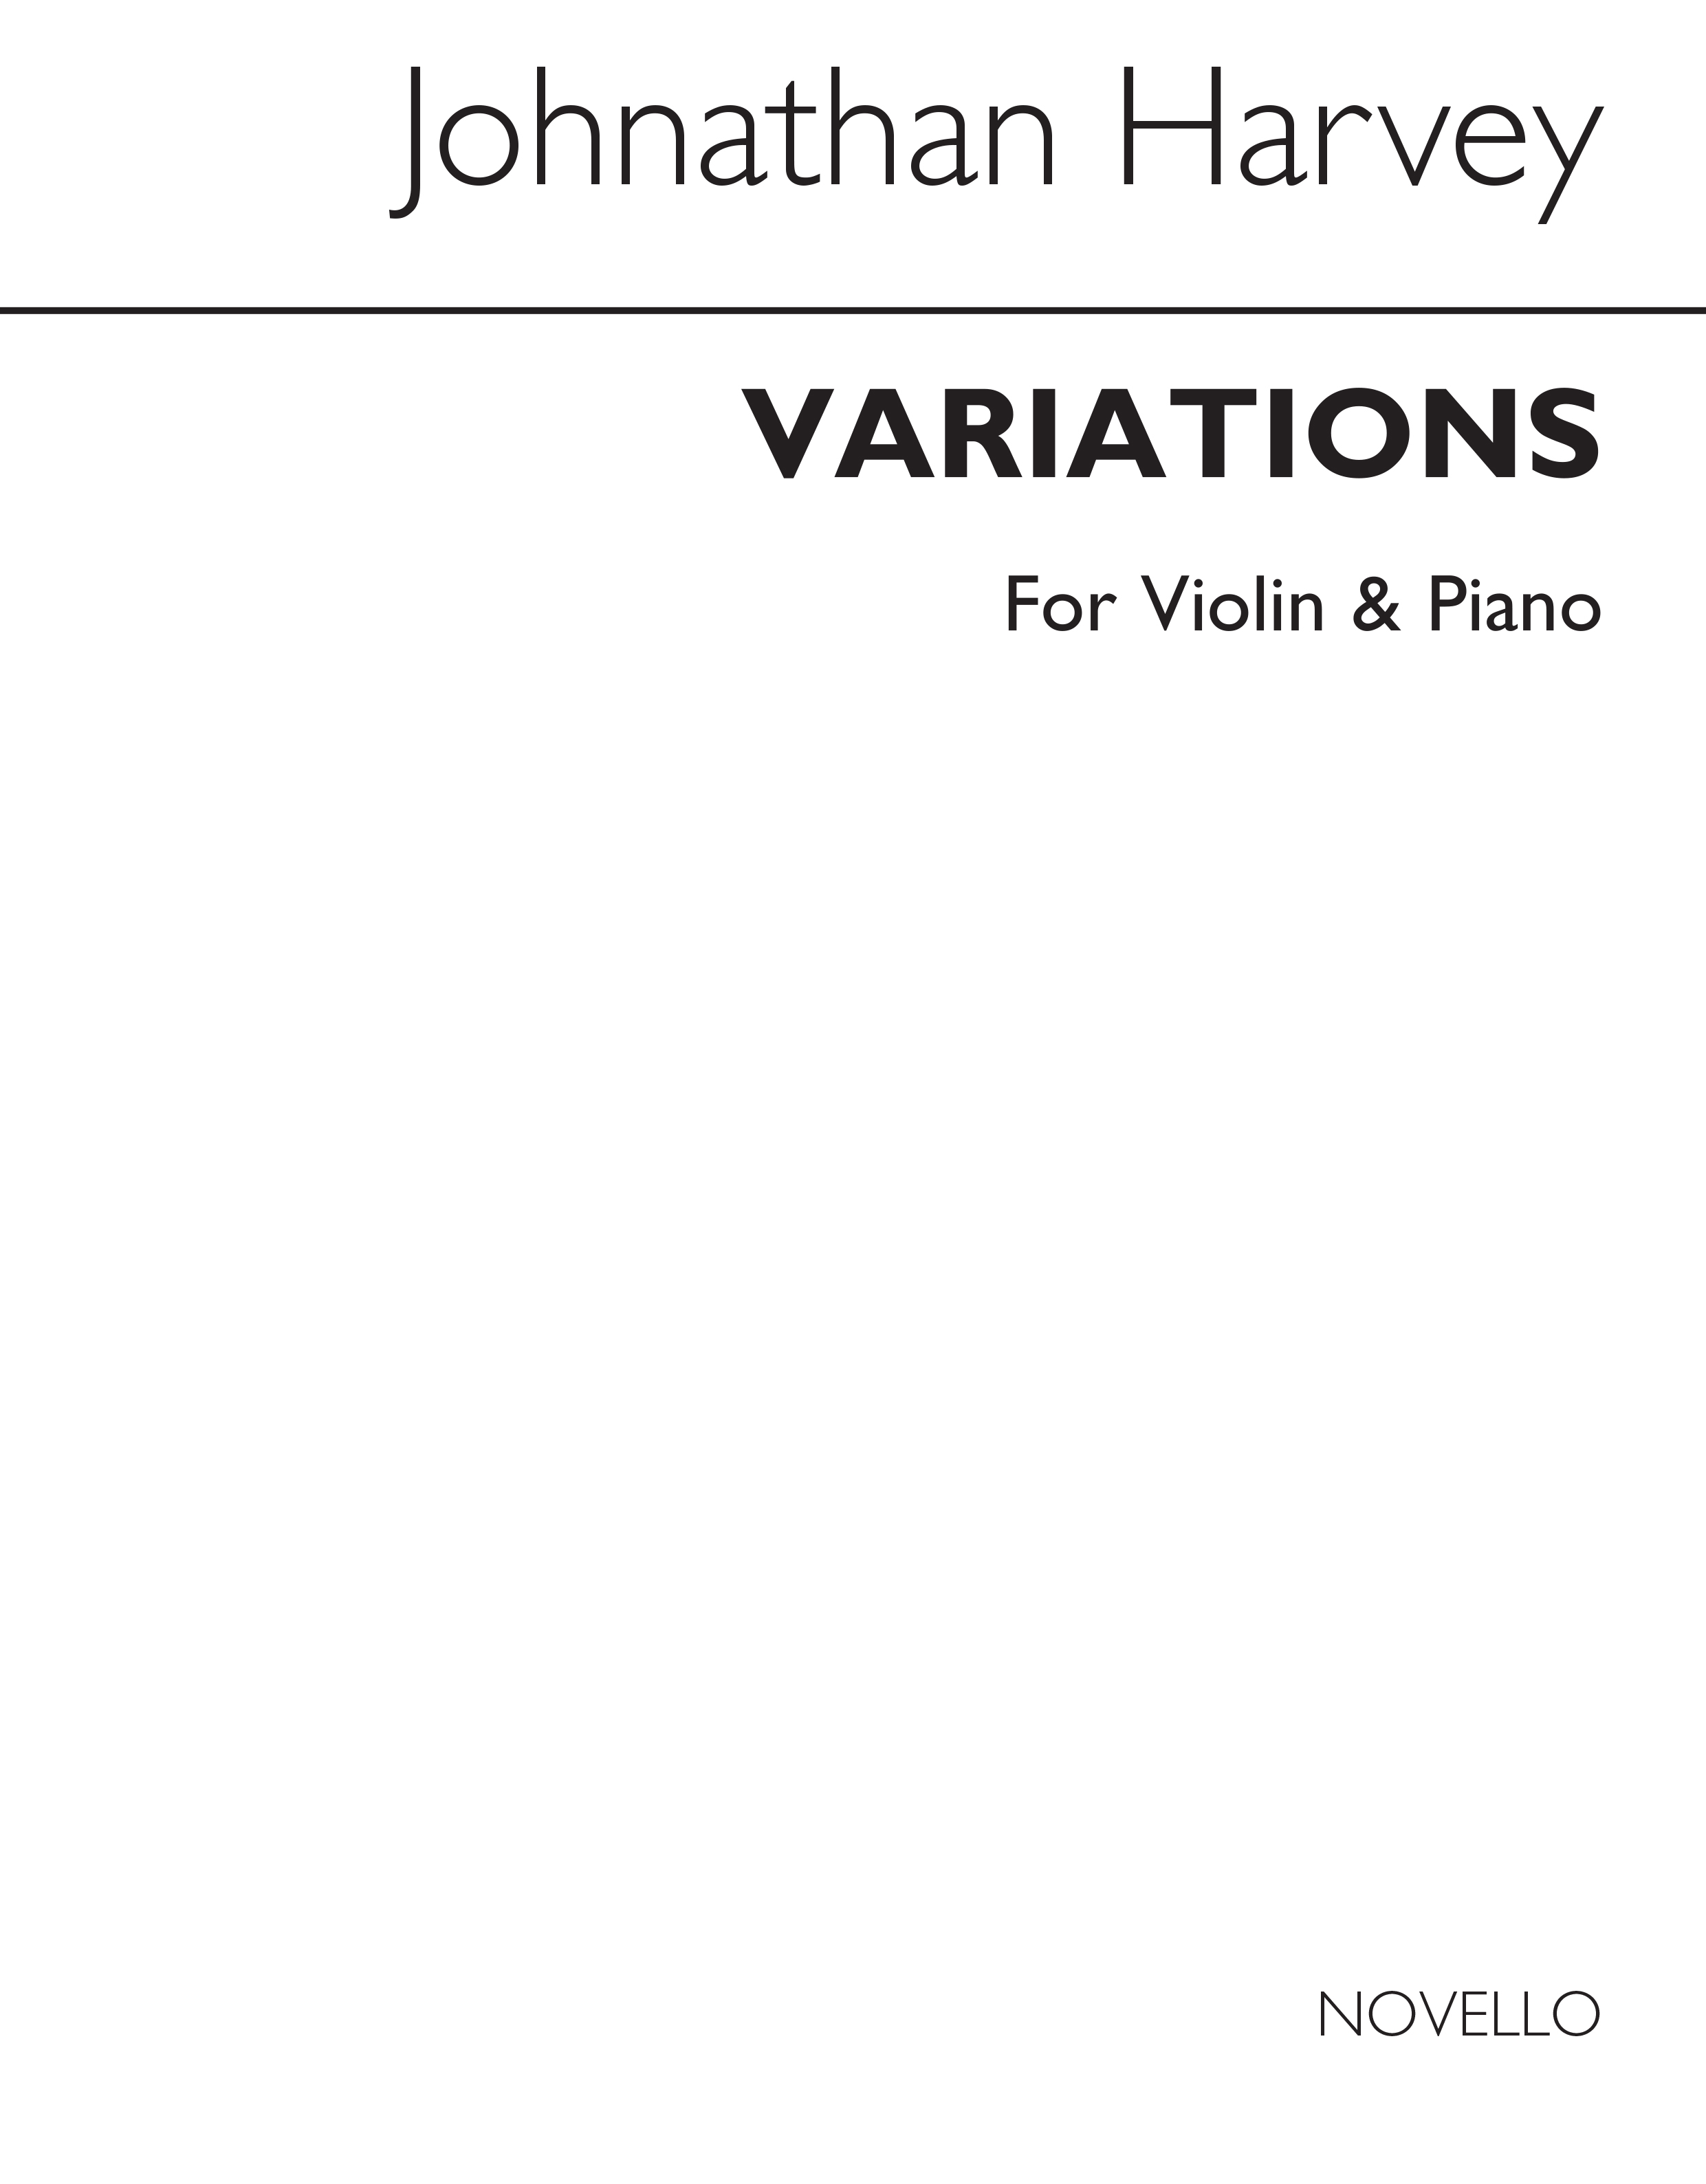 Jonathan Harvey: Variations For Violin & Piano